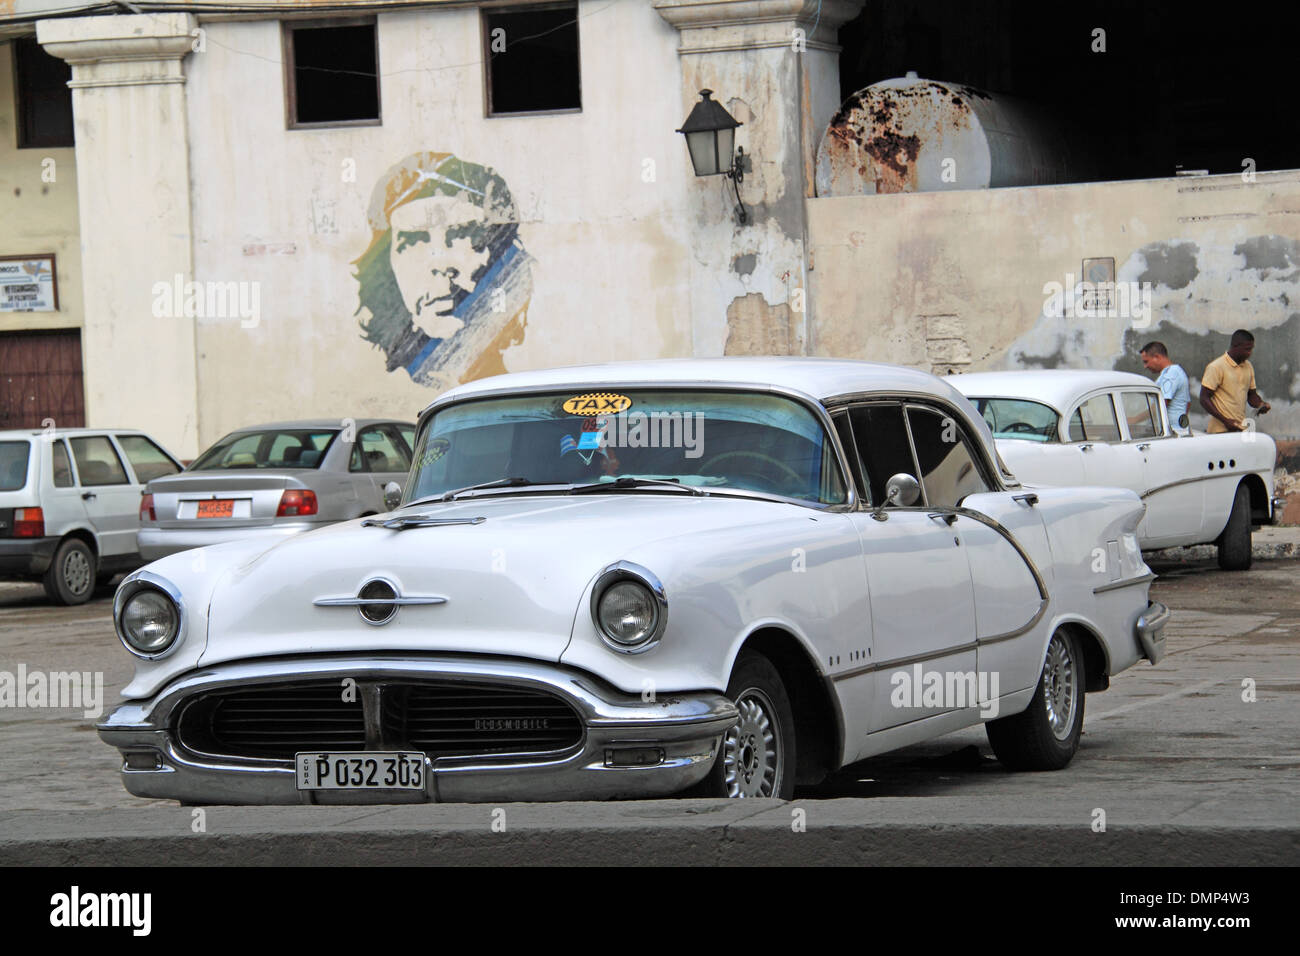 1956 Oldsmobile Holiday 98, Avenida del Peurto, Old Havana (La Habana Vieja), Cuba, Caribbean Sea, Central America Stock Photo